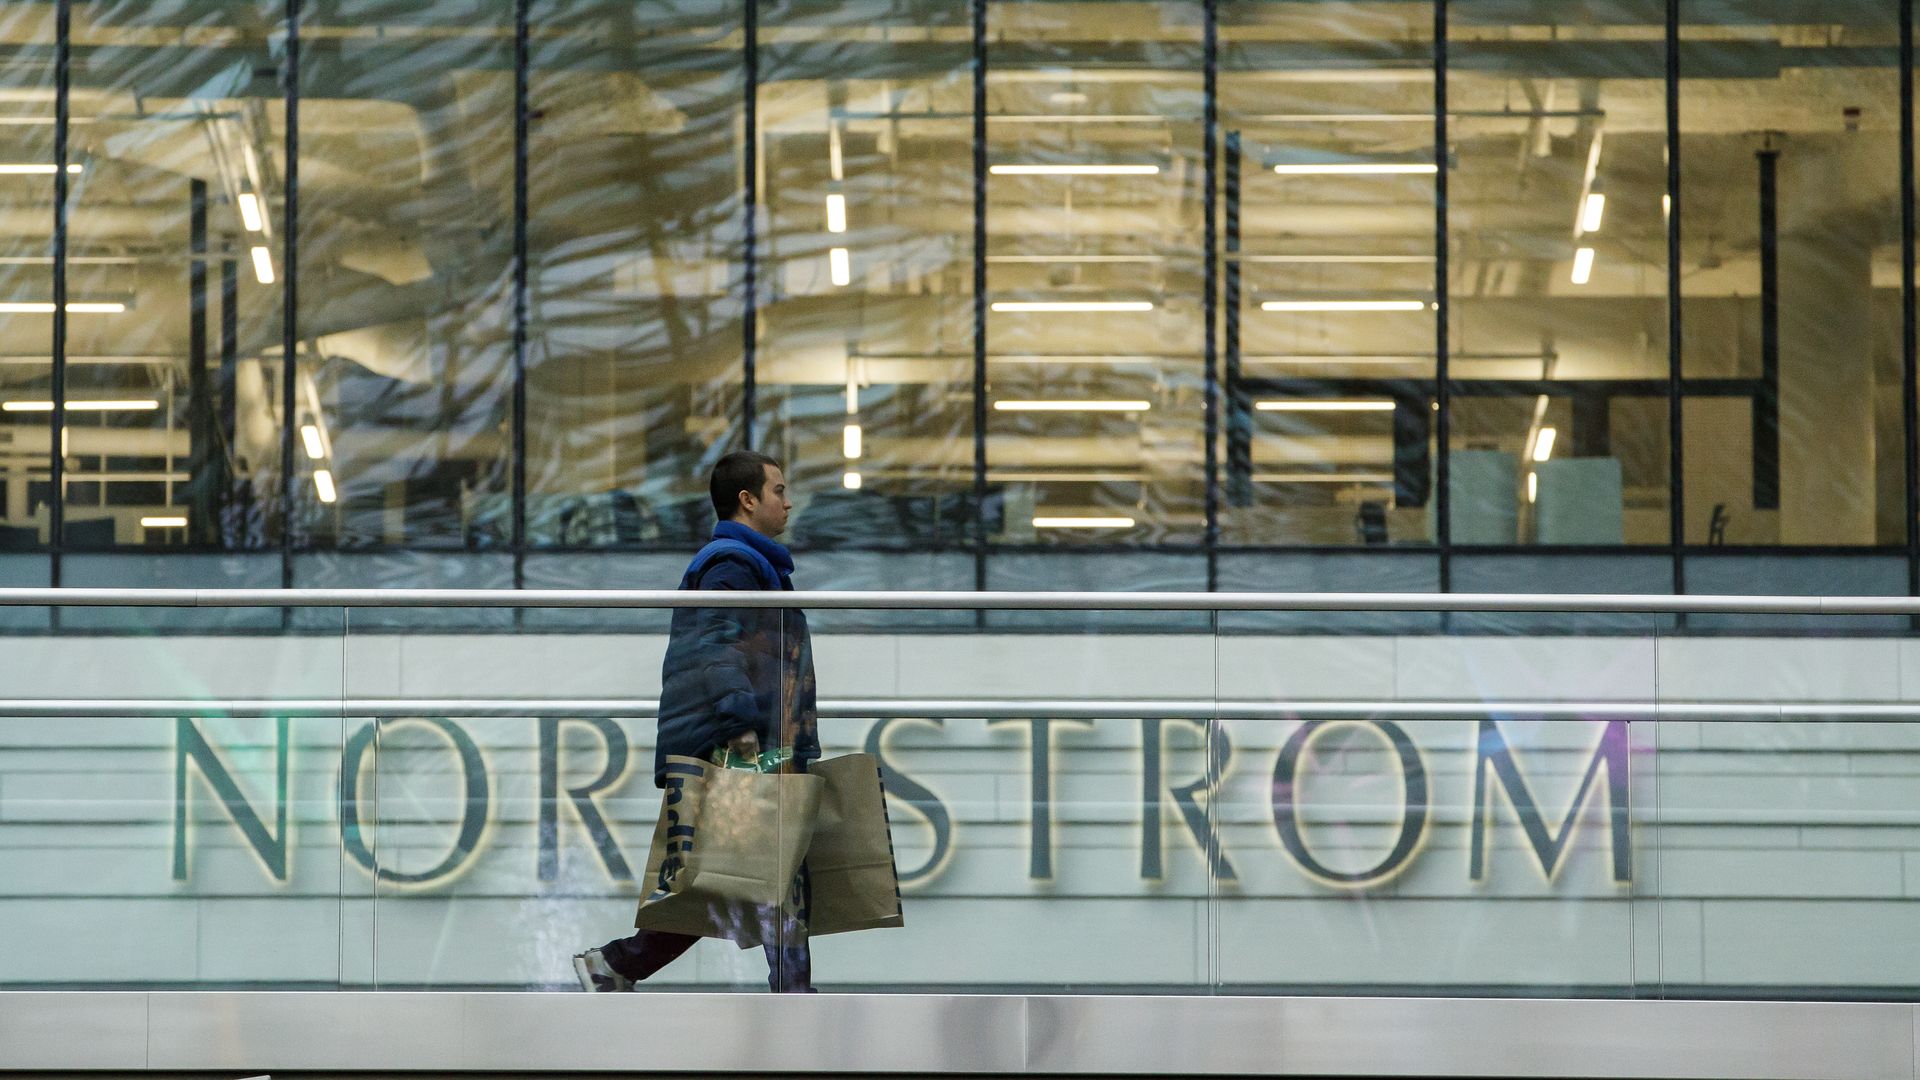 Image of shopper in front of Nordstrom storefront